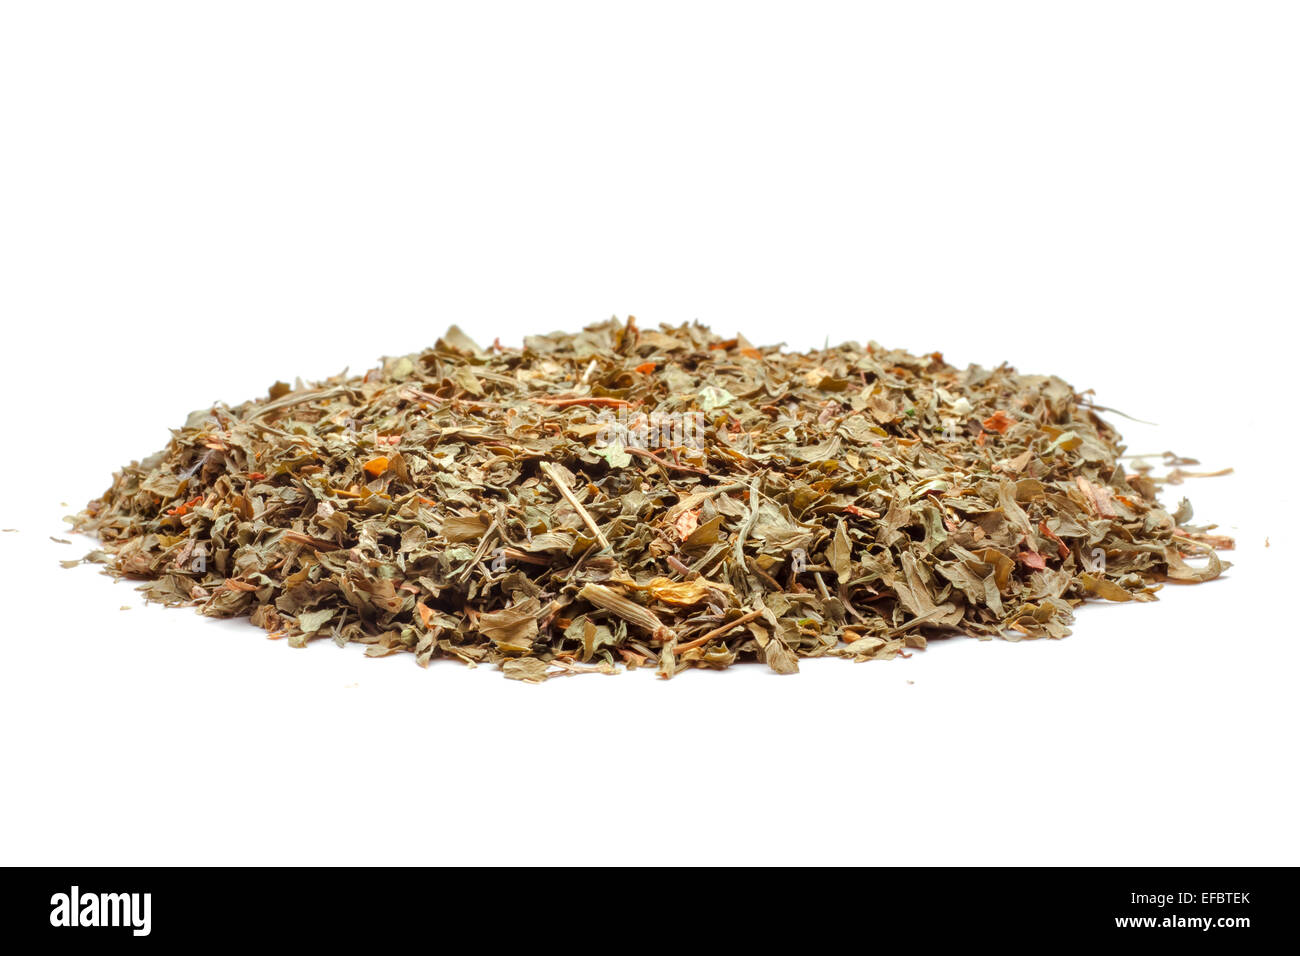 Pile of dried oregano Stock Photo